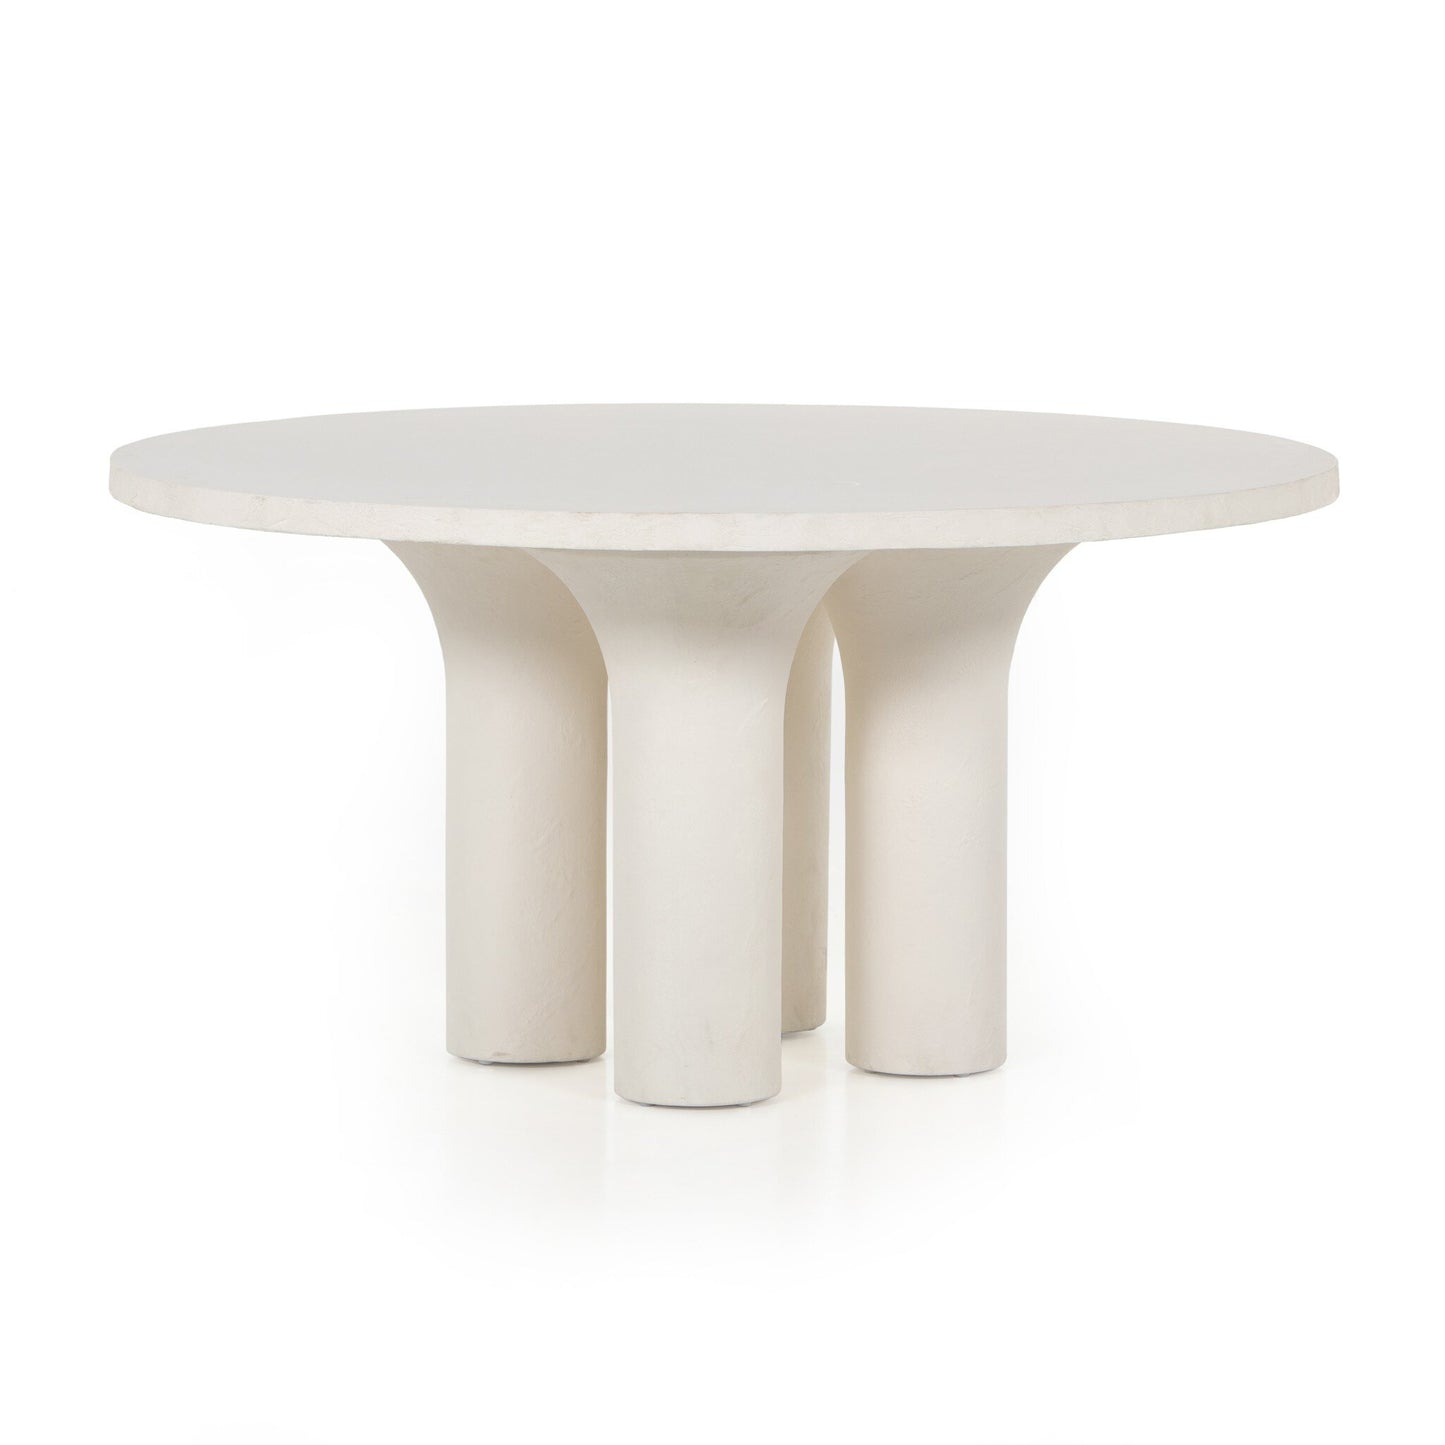 Four Hands 237447-001 Parra Round Dining Table - White Concrete